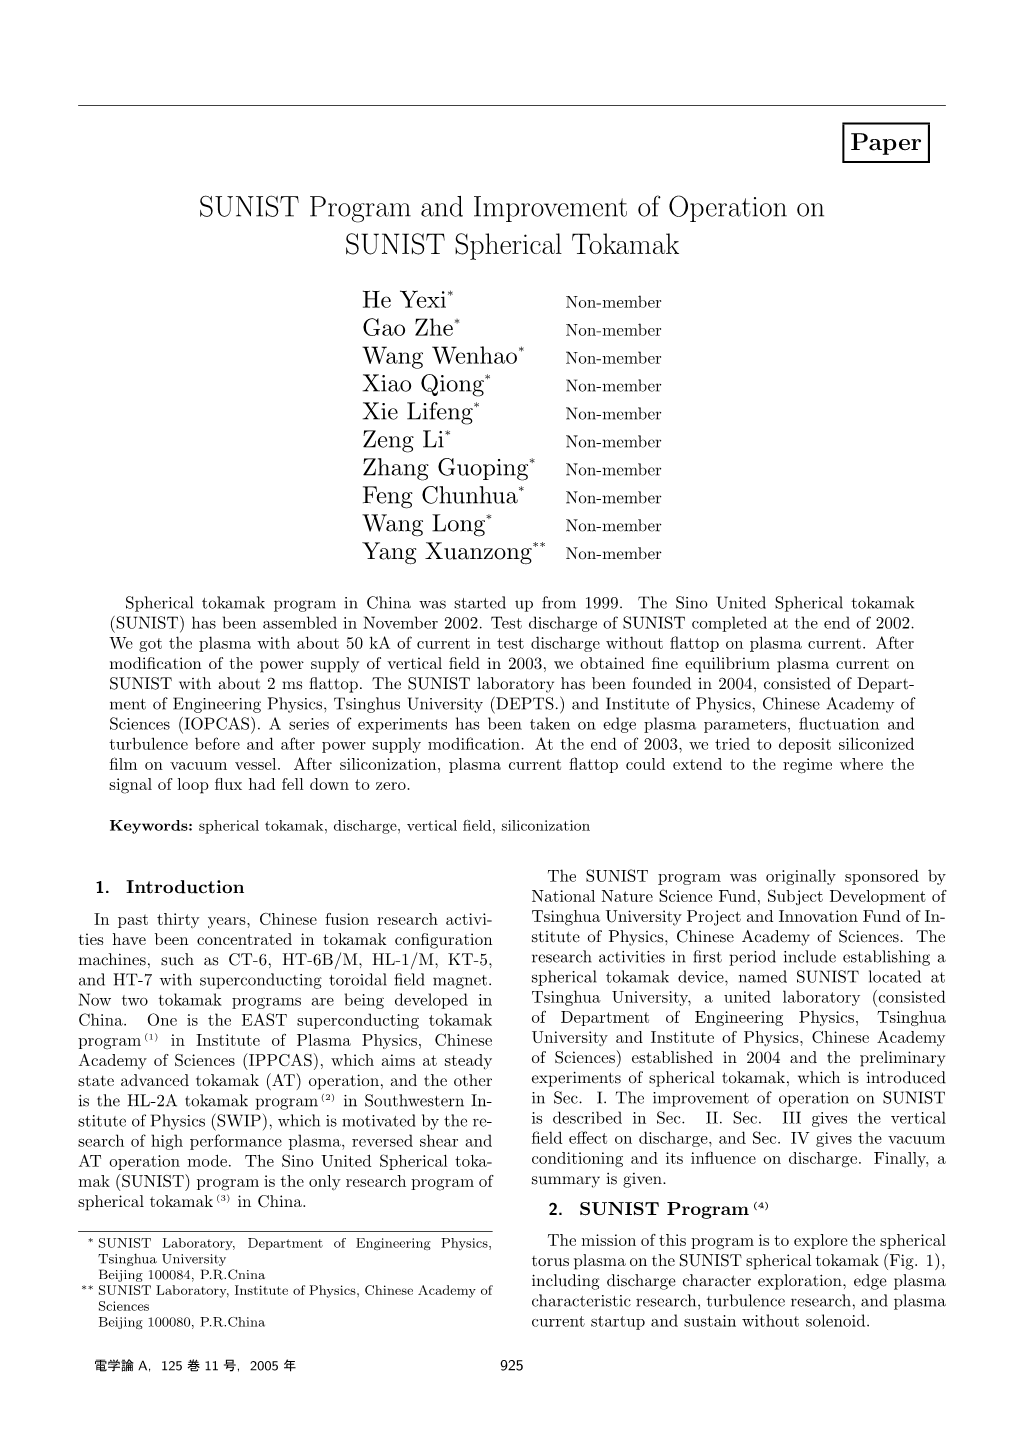 SUNIST Program and Improvement of Operation on SUNIST Spherical Tokamak